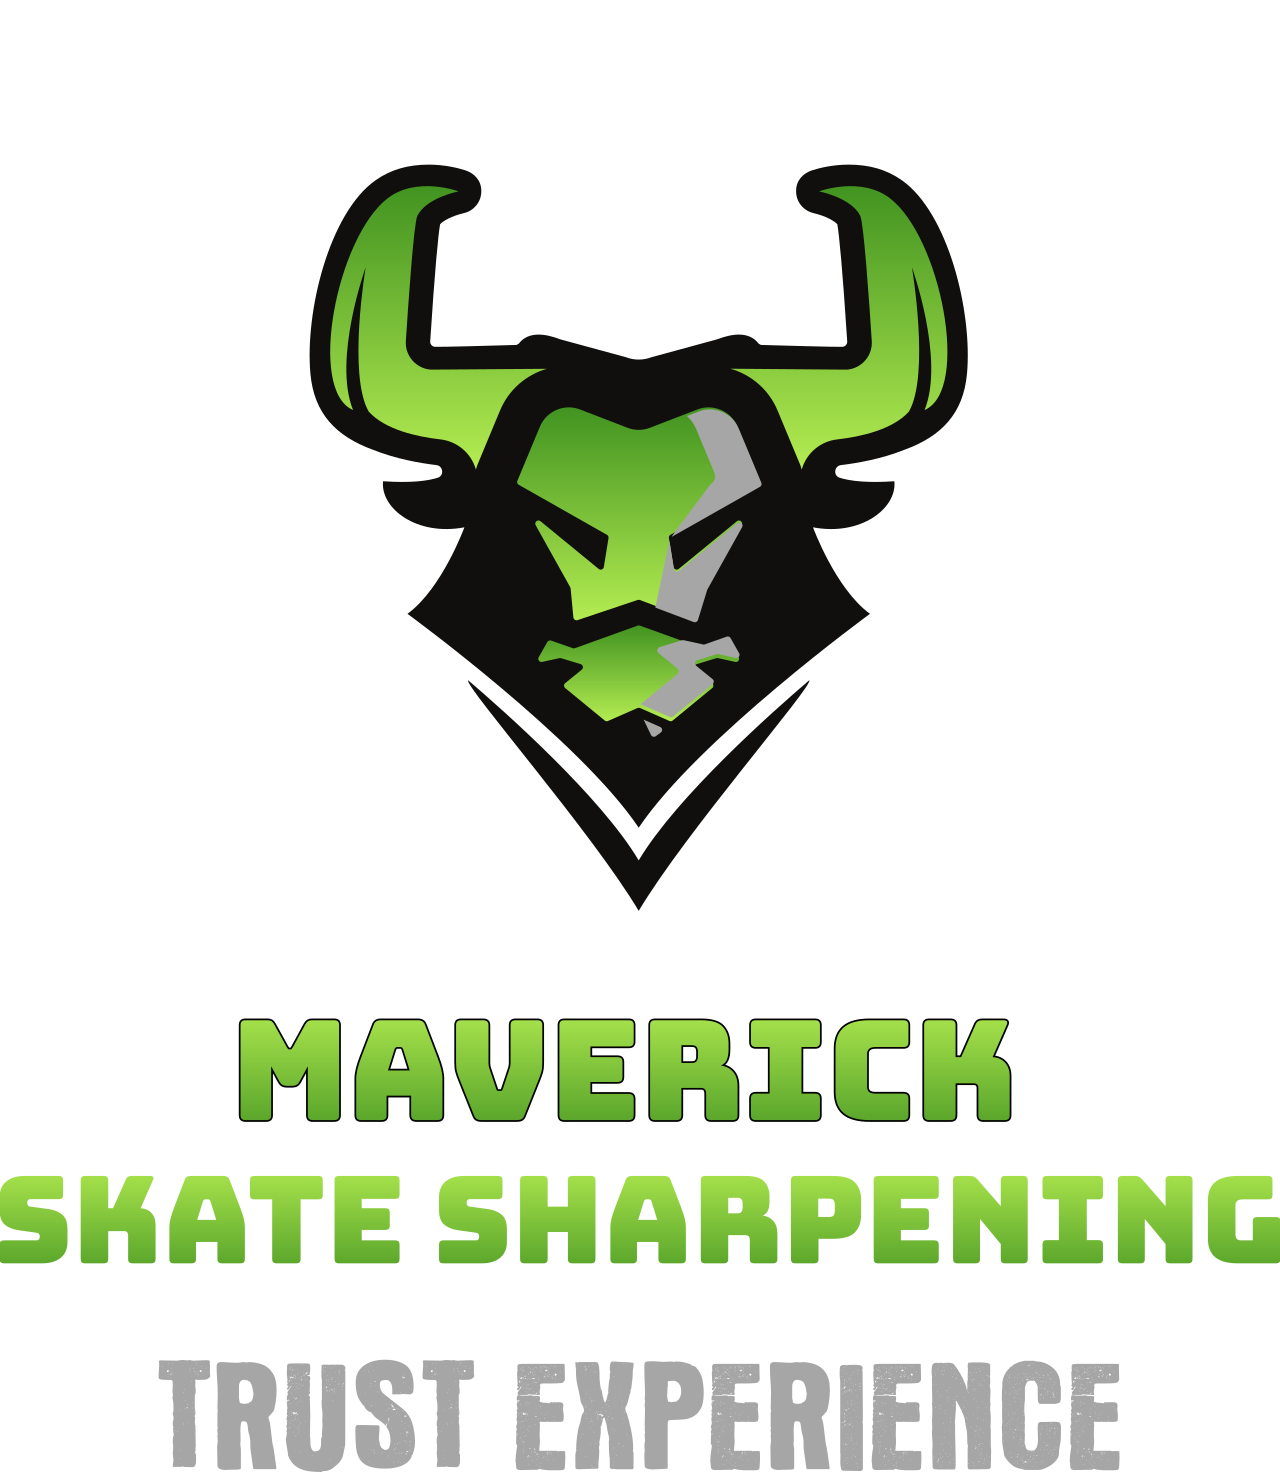 Maverick 's web page